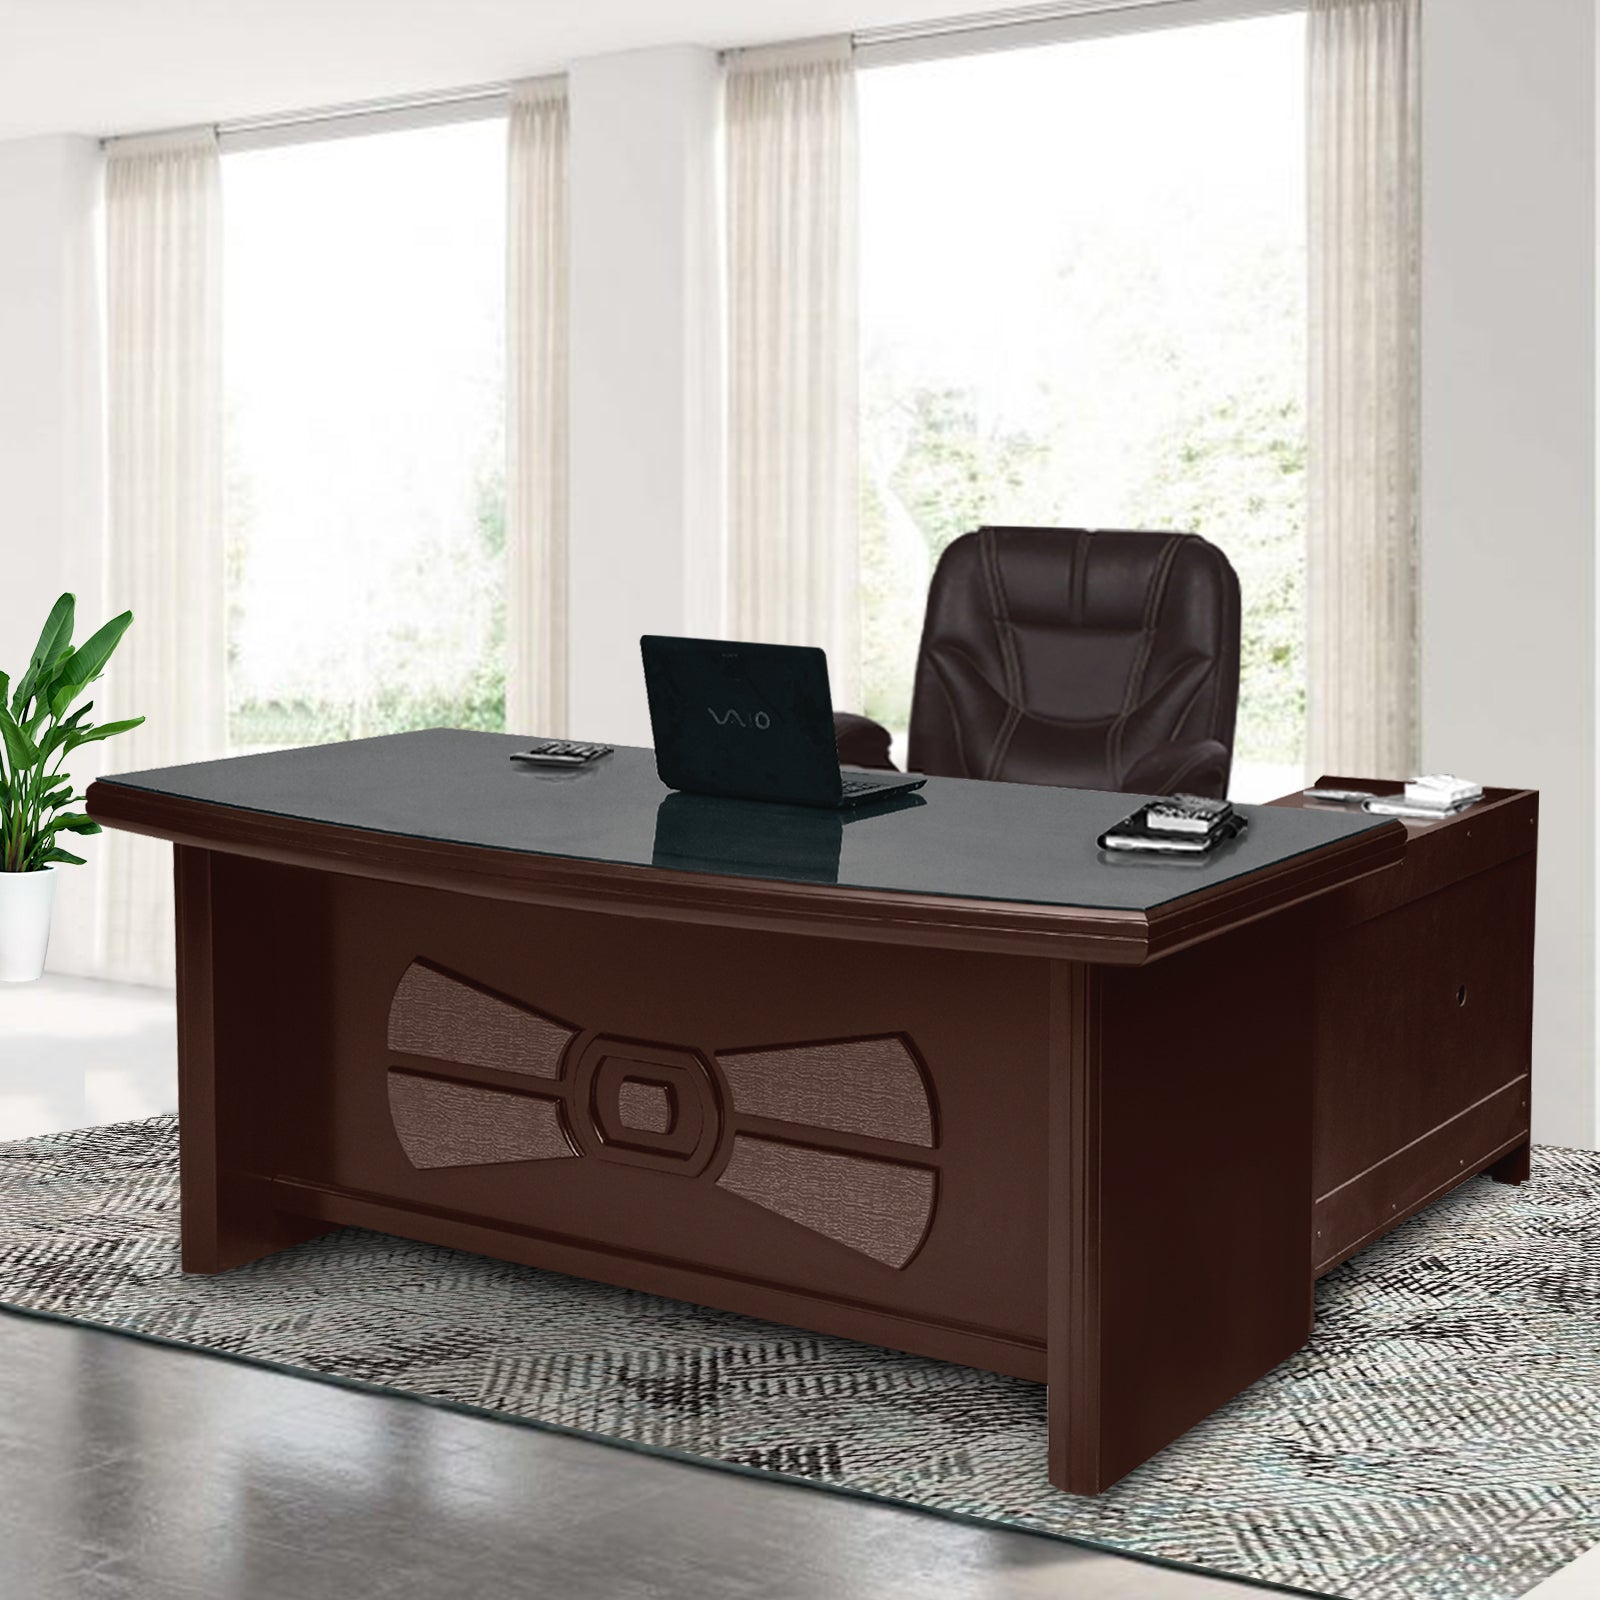 Wega6036 Office Study Table by Zorin in Walnut Finish